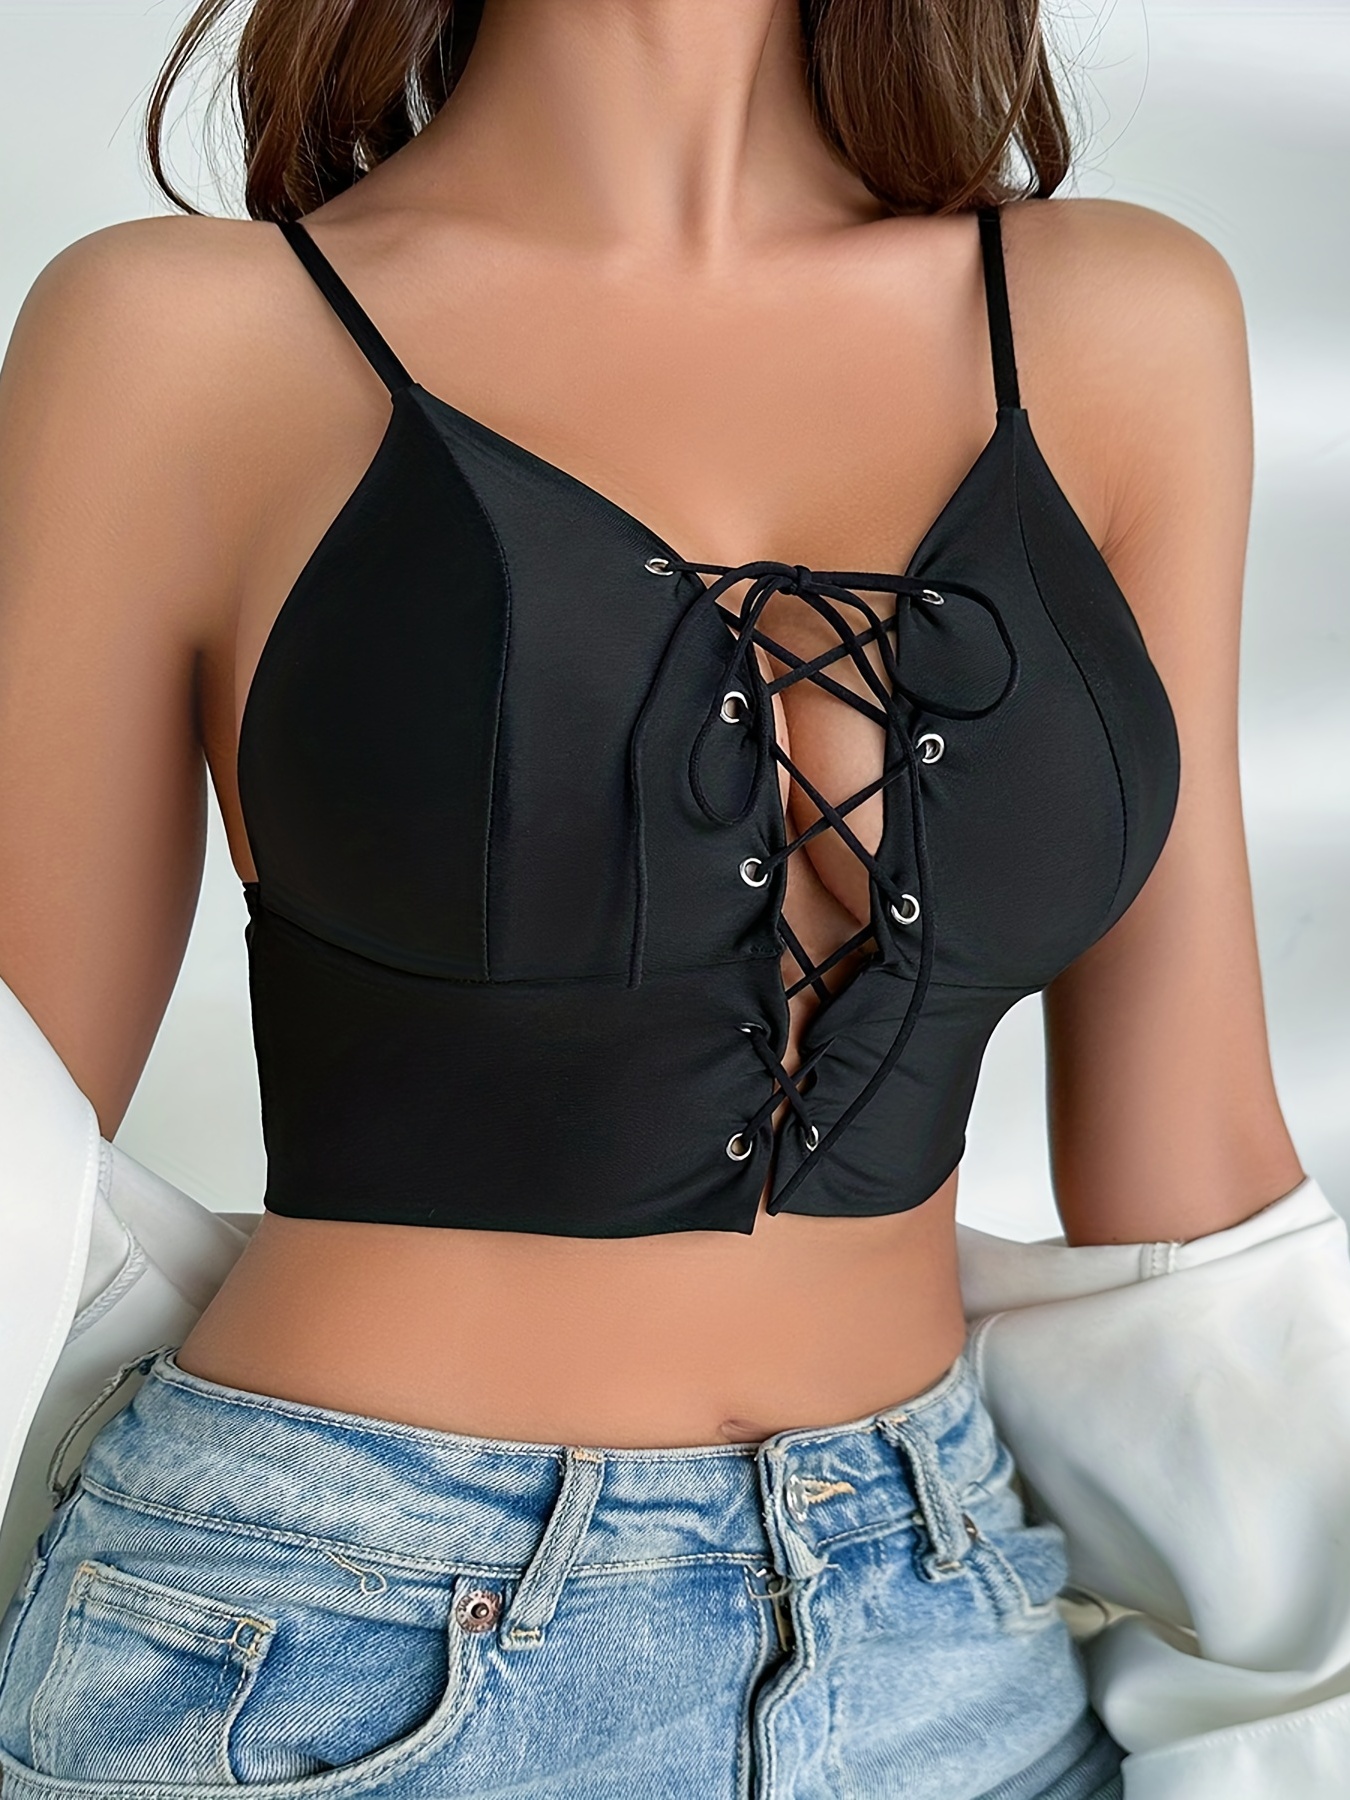 Women Sexy Lace Bra Crop Tops Underwear Push Up Bralette Strappy Lingerie  Vest